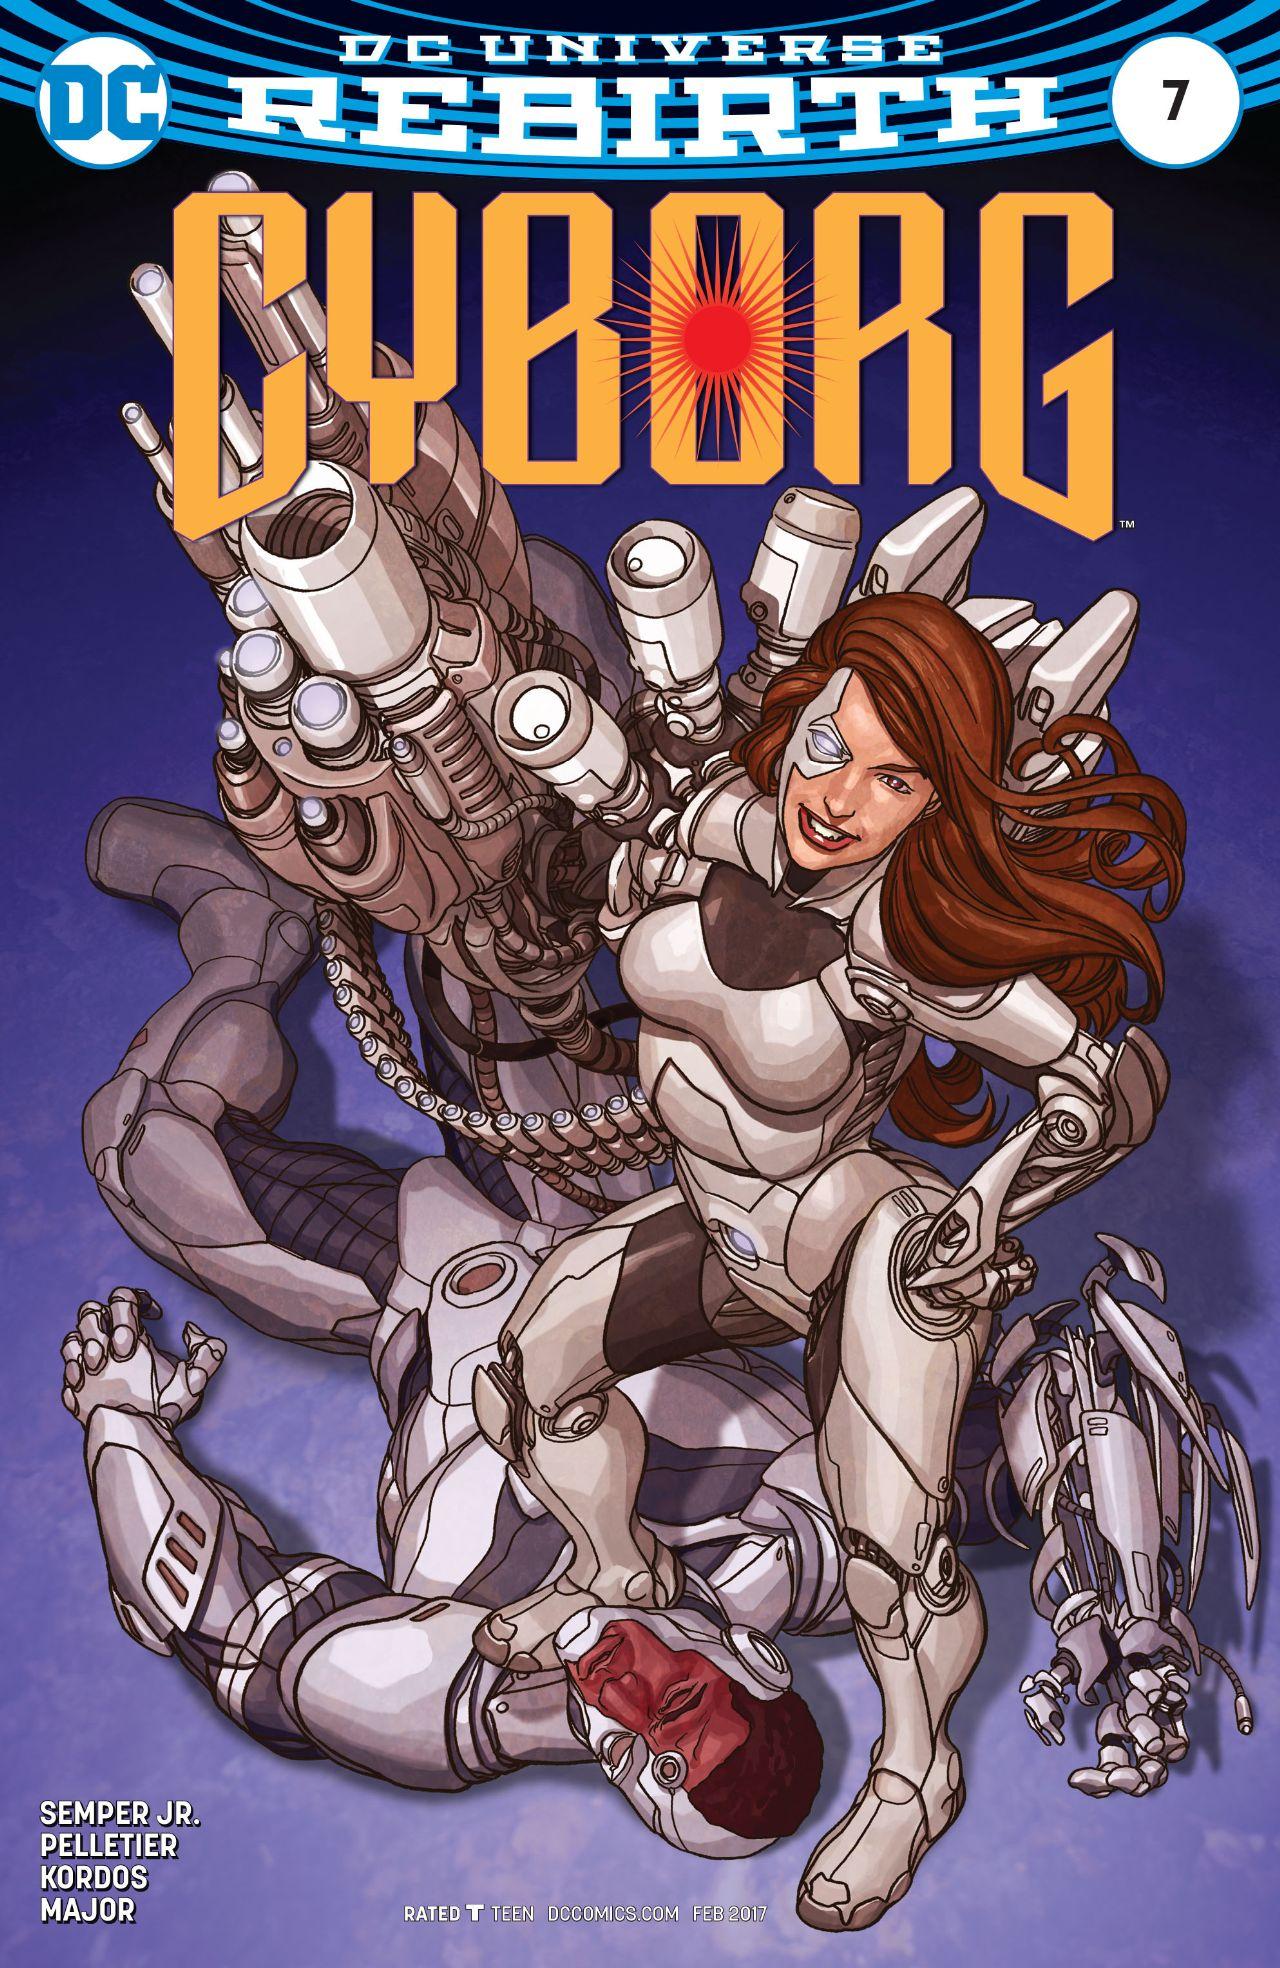 Cyborg Vol. 2 #7